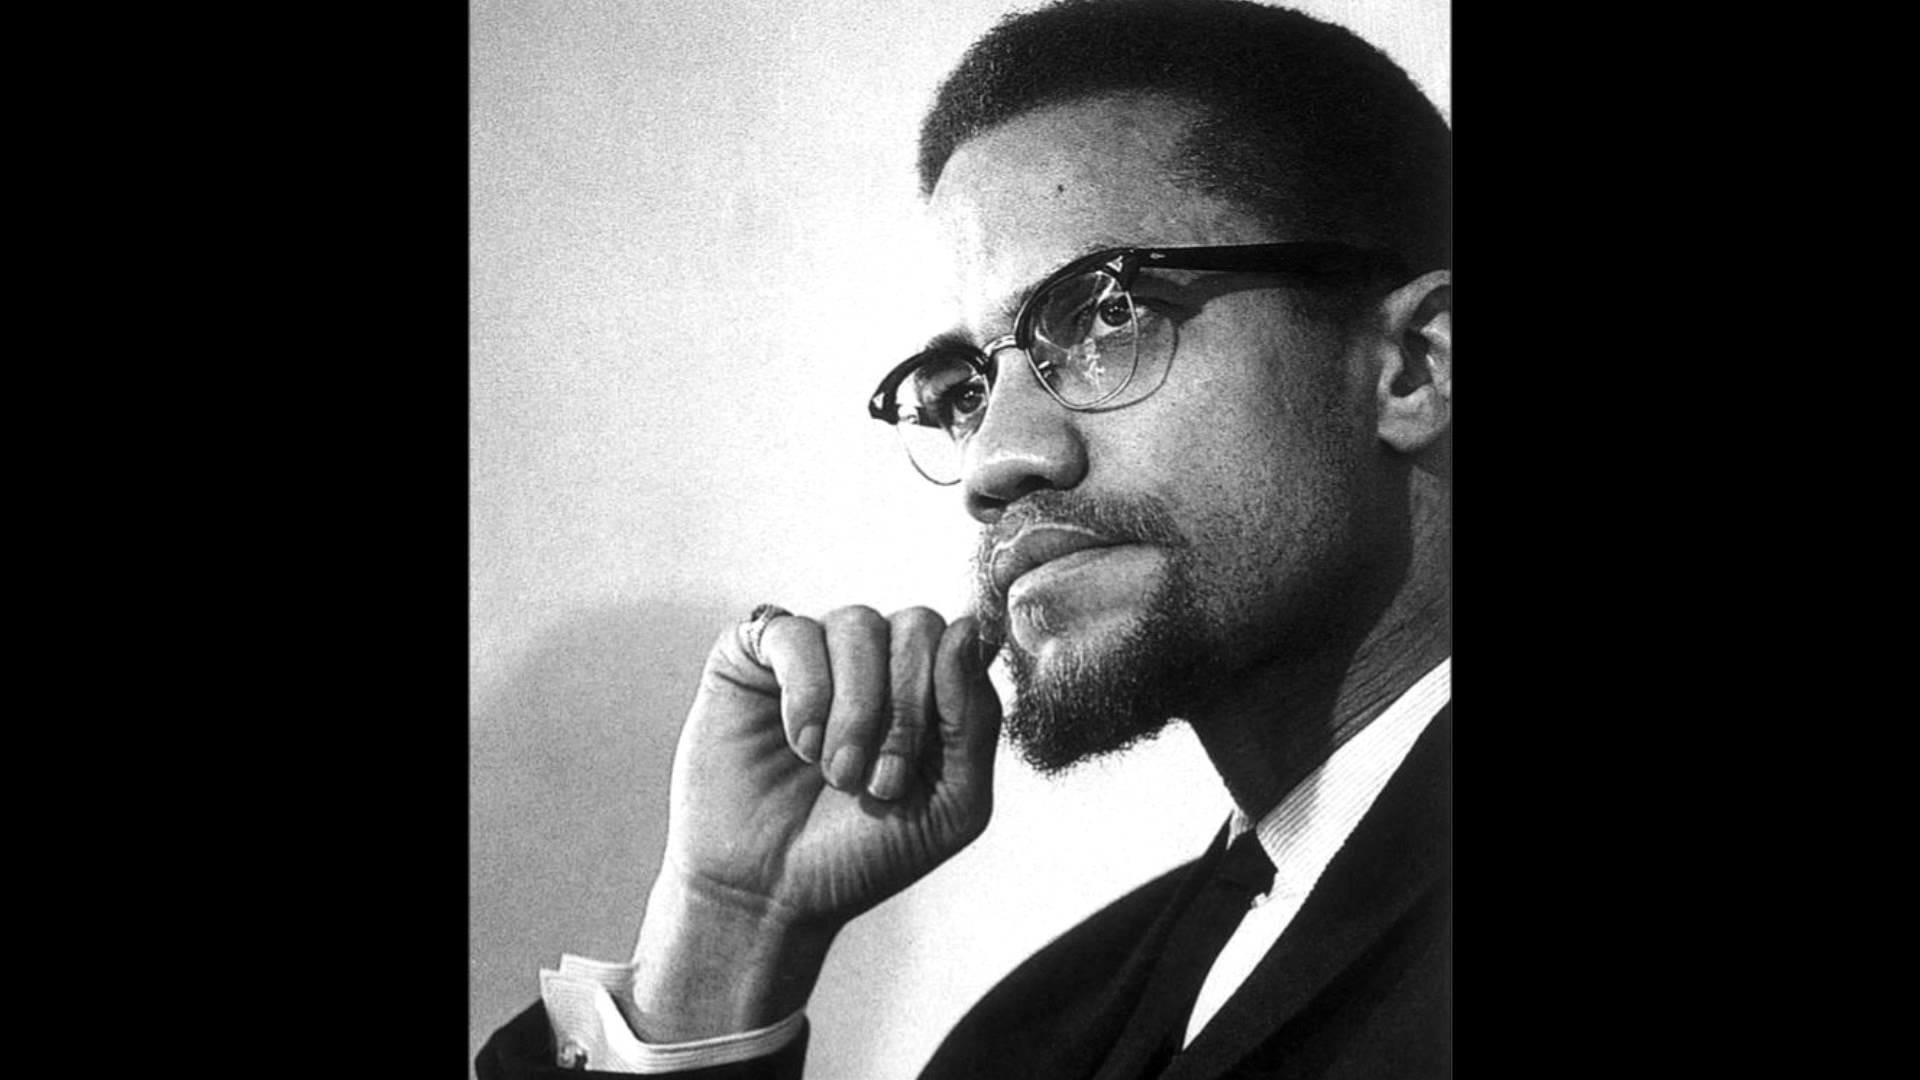 1920x1080 Malcolm X - "The Ballot or the Bullet" speech (April 3, 1964)